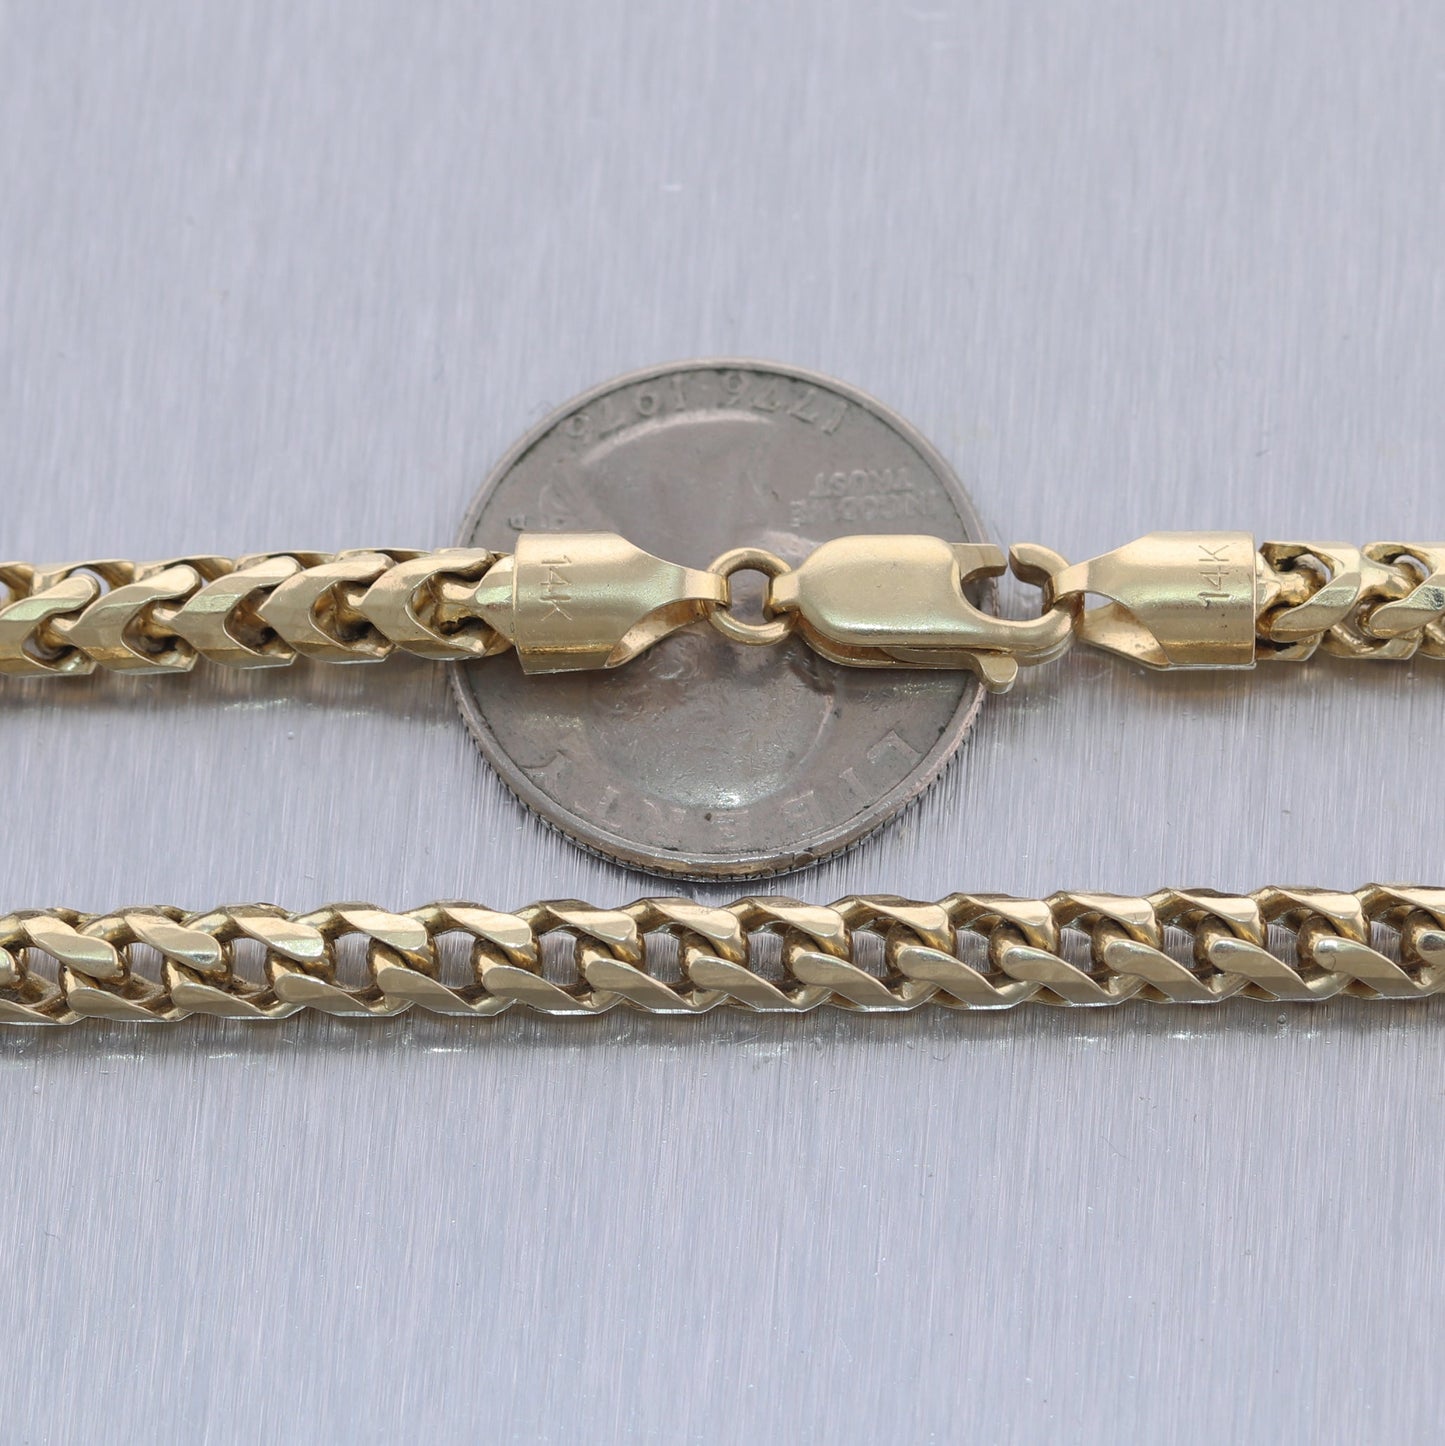 Men's 75.9g 14k Yellow Gold Franco Wheat Braid 24" Chain Necklace